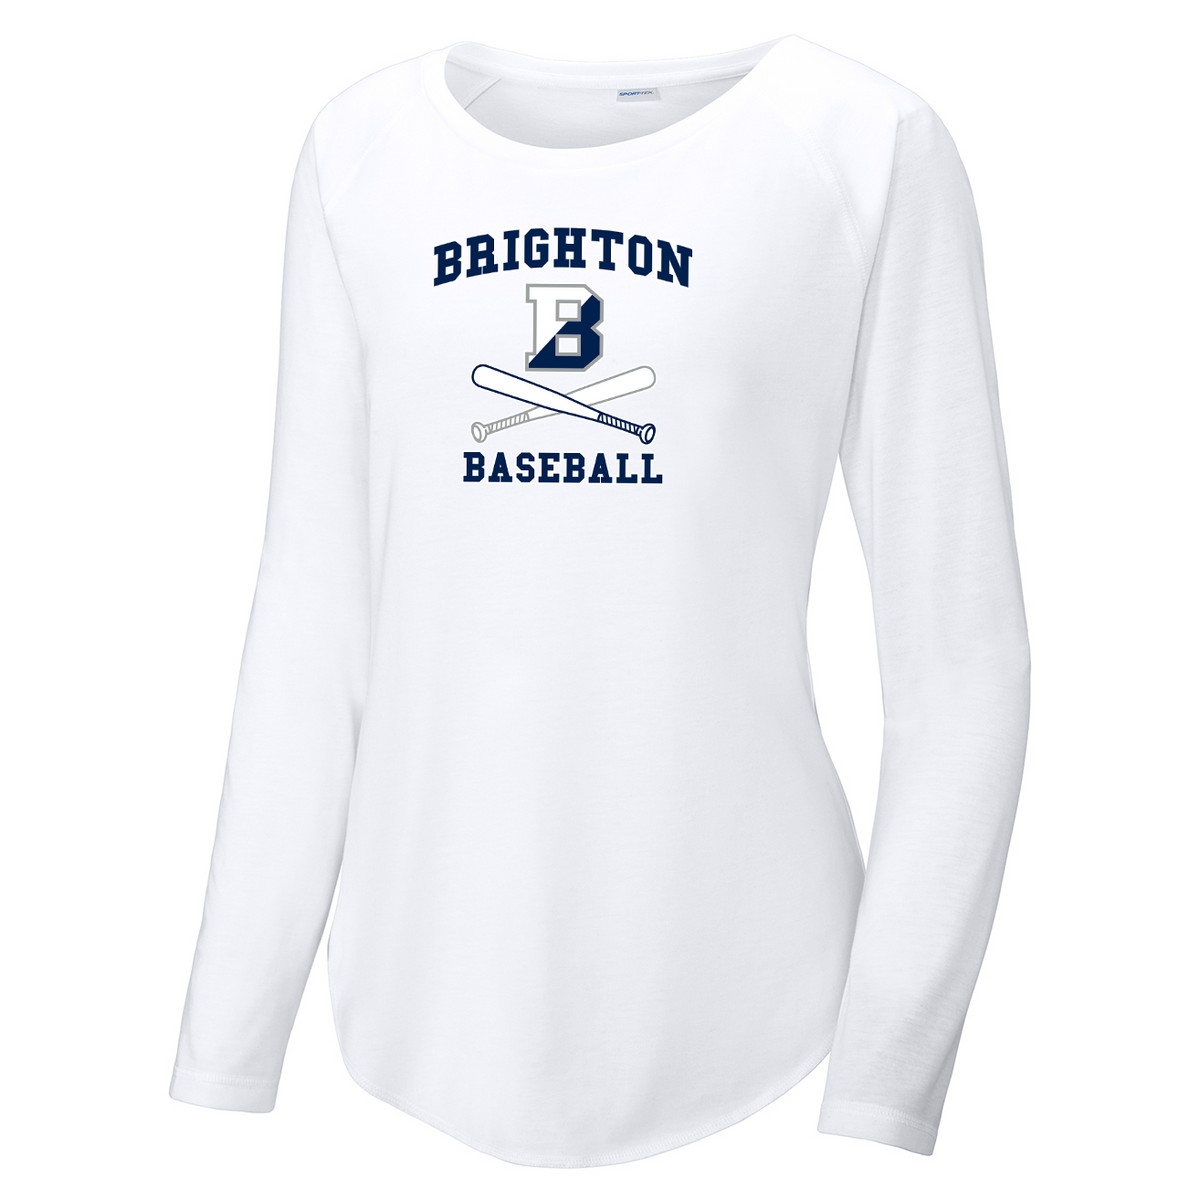 Brighton Baseball Women's Raglan Long Sleeve CottonTouch